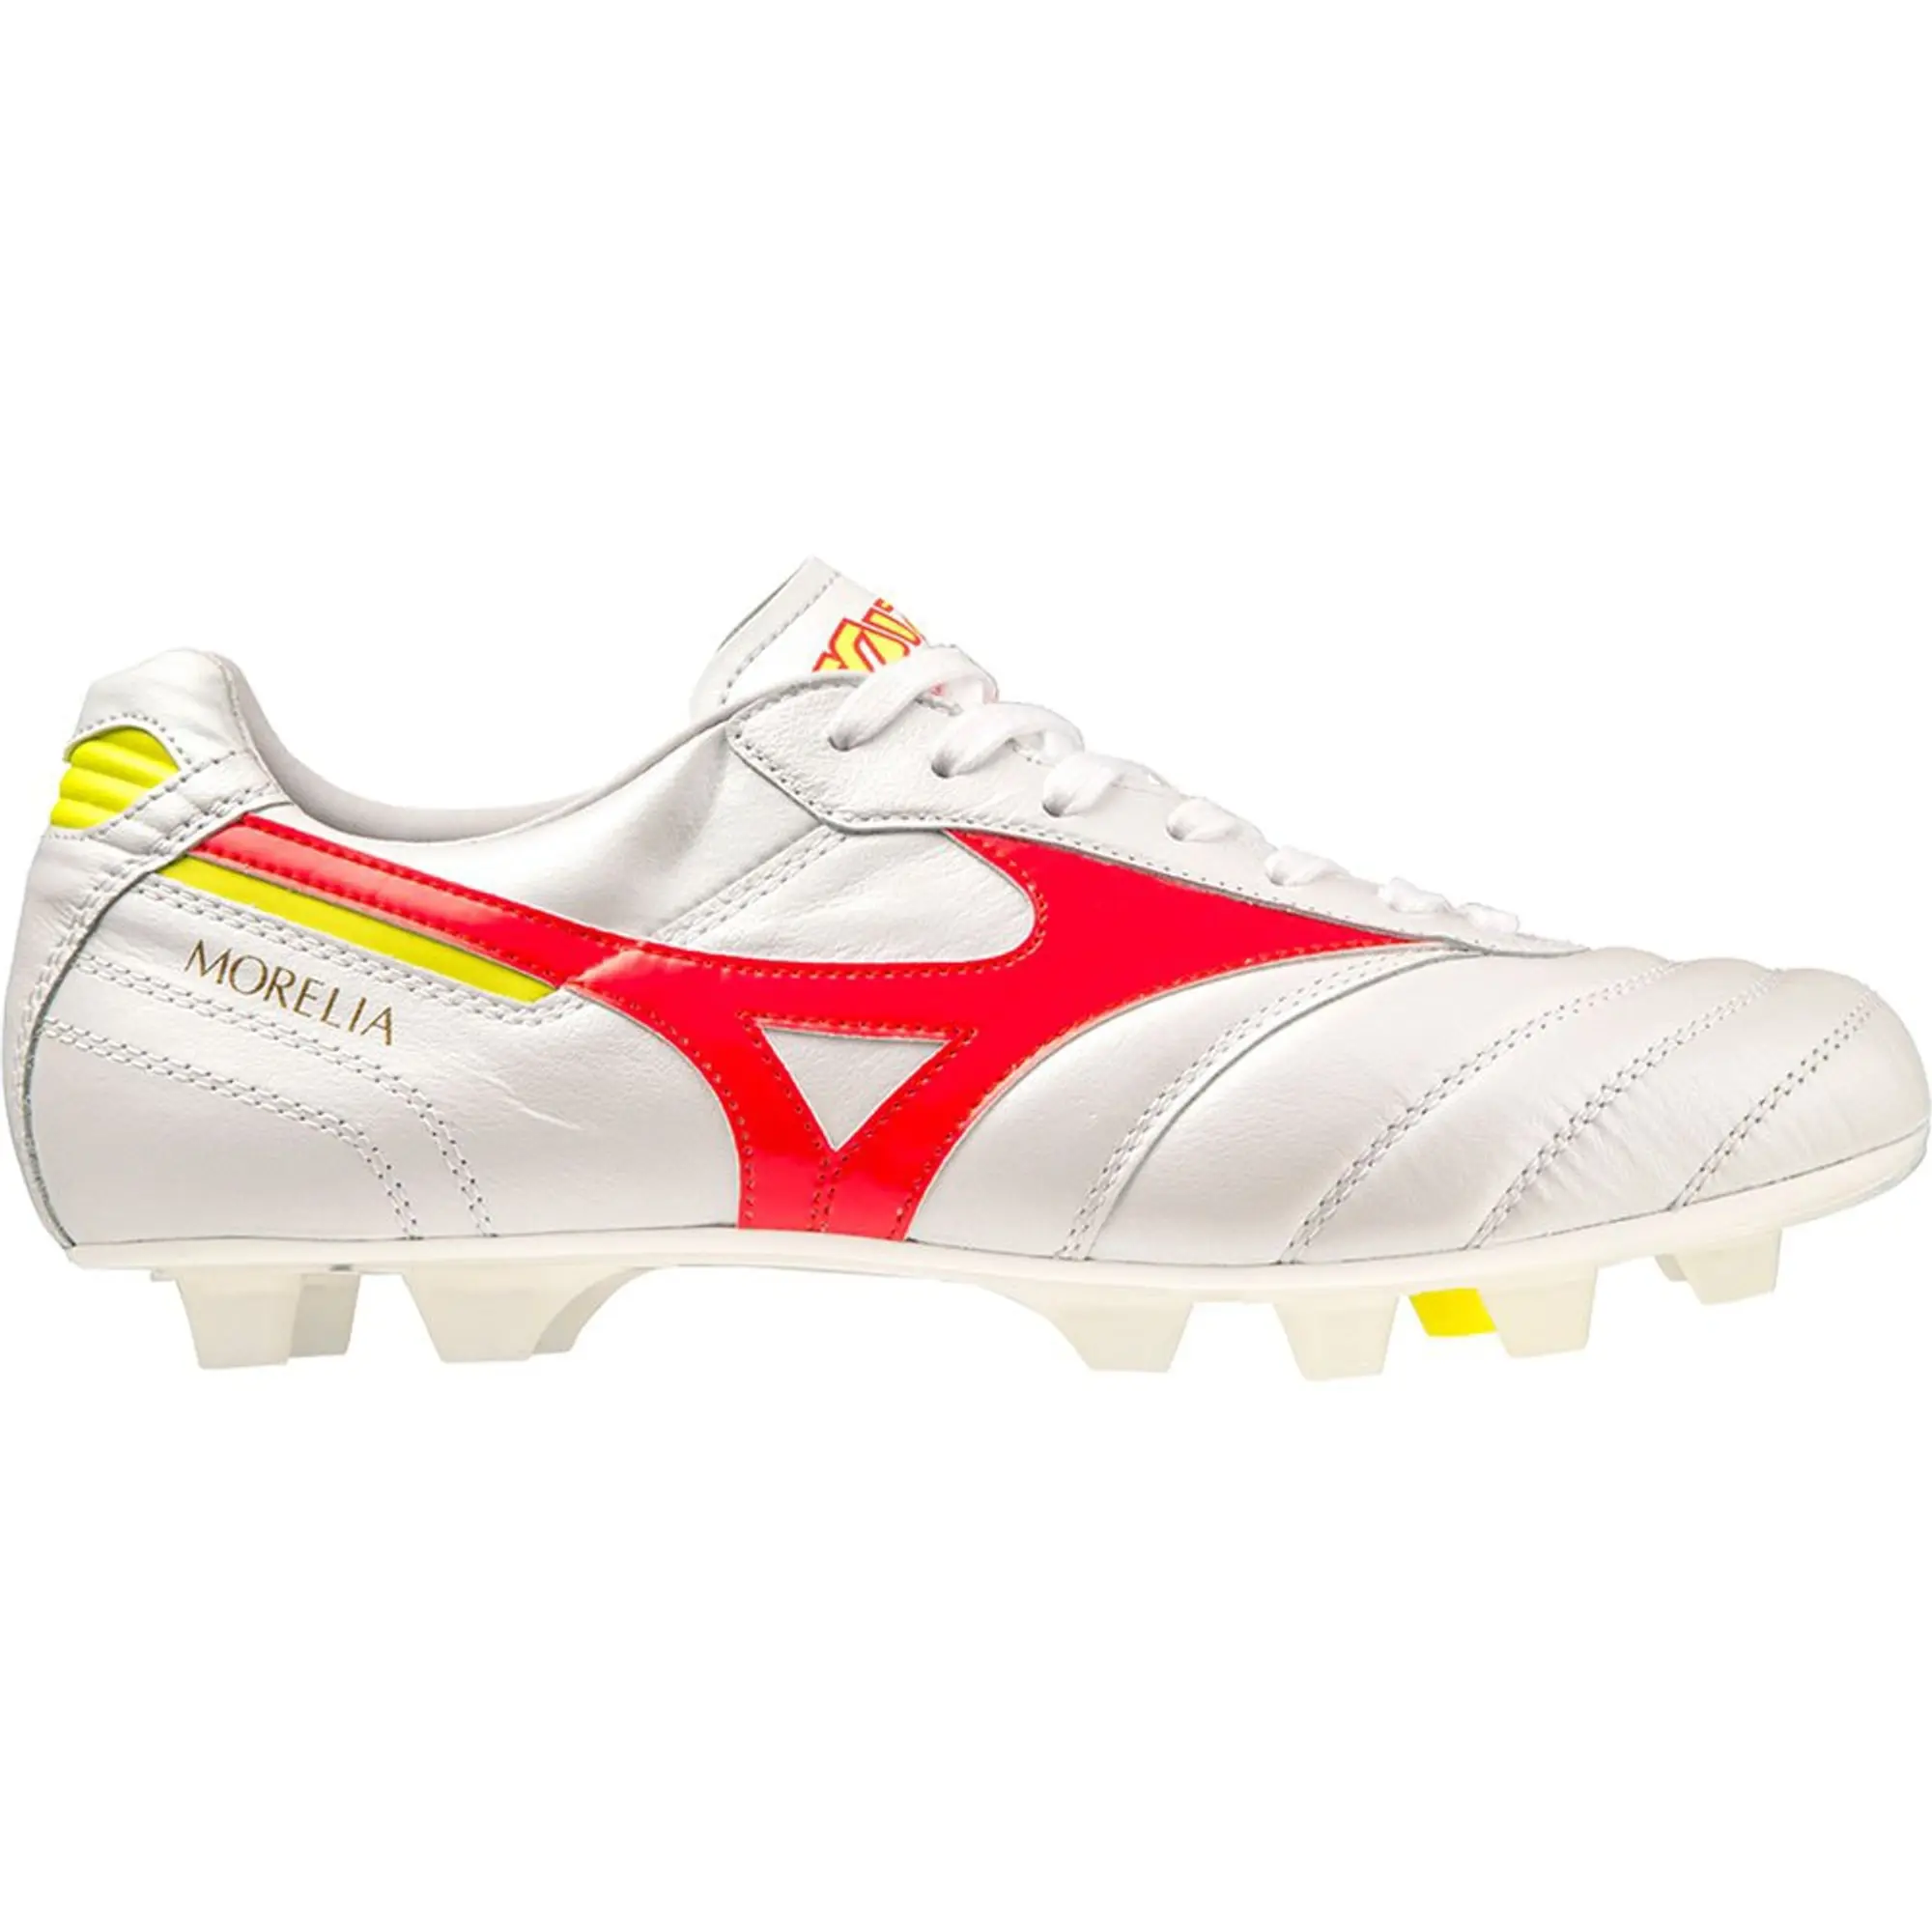 Mizuno Morelia Ii Japan Football Boots  - White